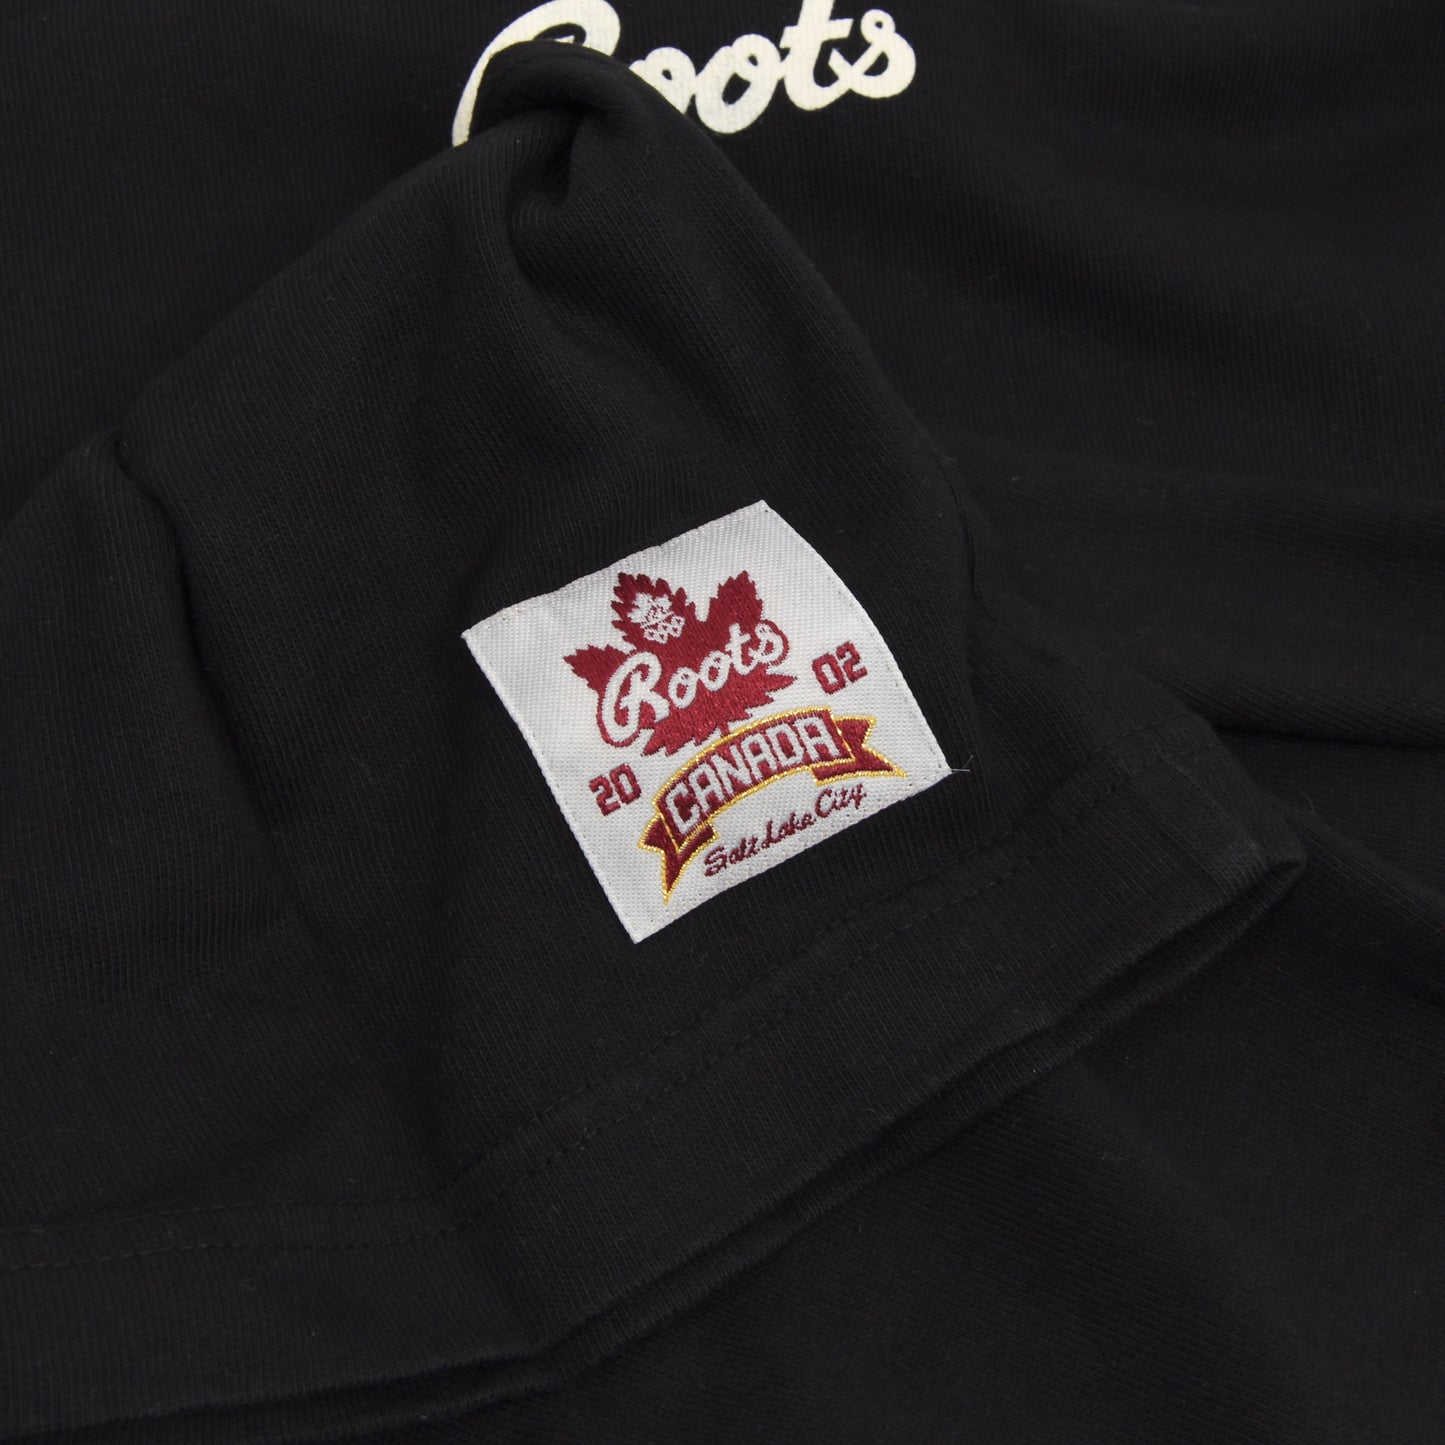 Roots Athletics 2002 Gold Medal Hockey Long Sleeved Shirt Size L - Black